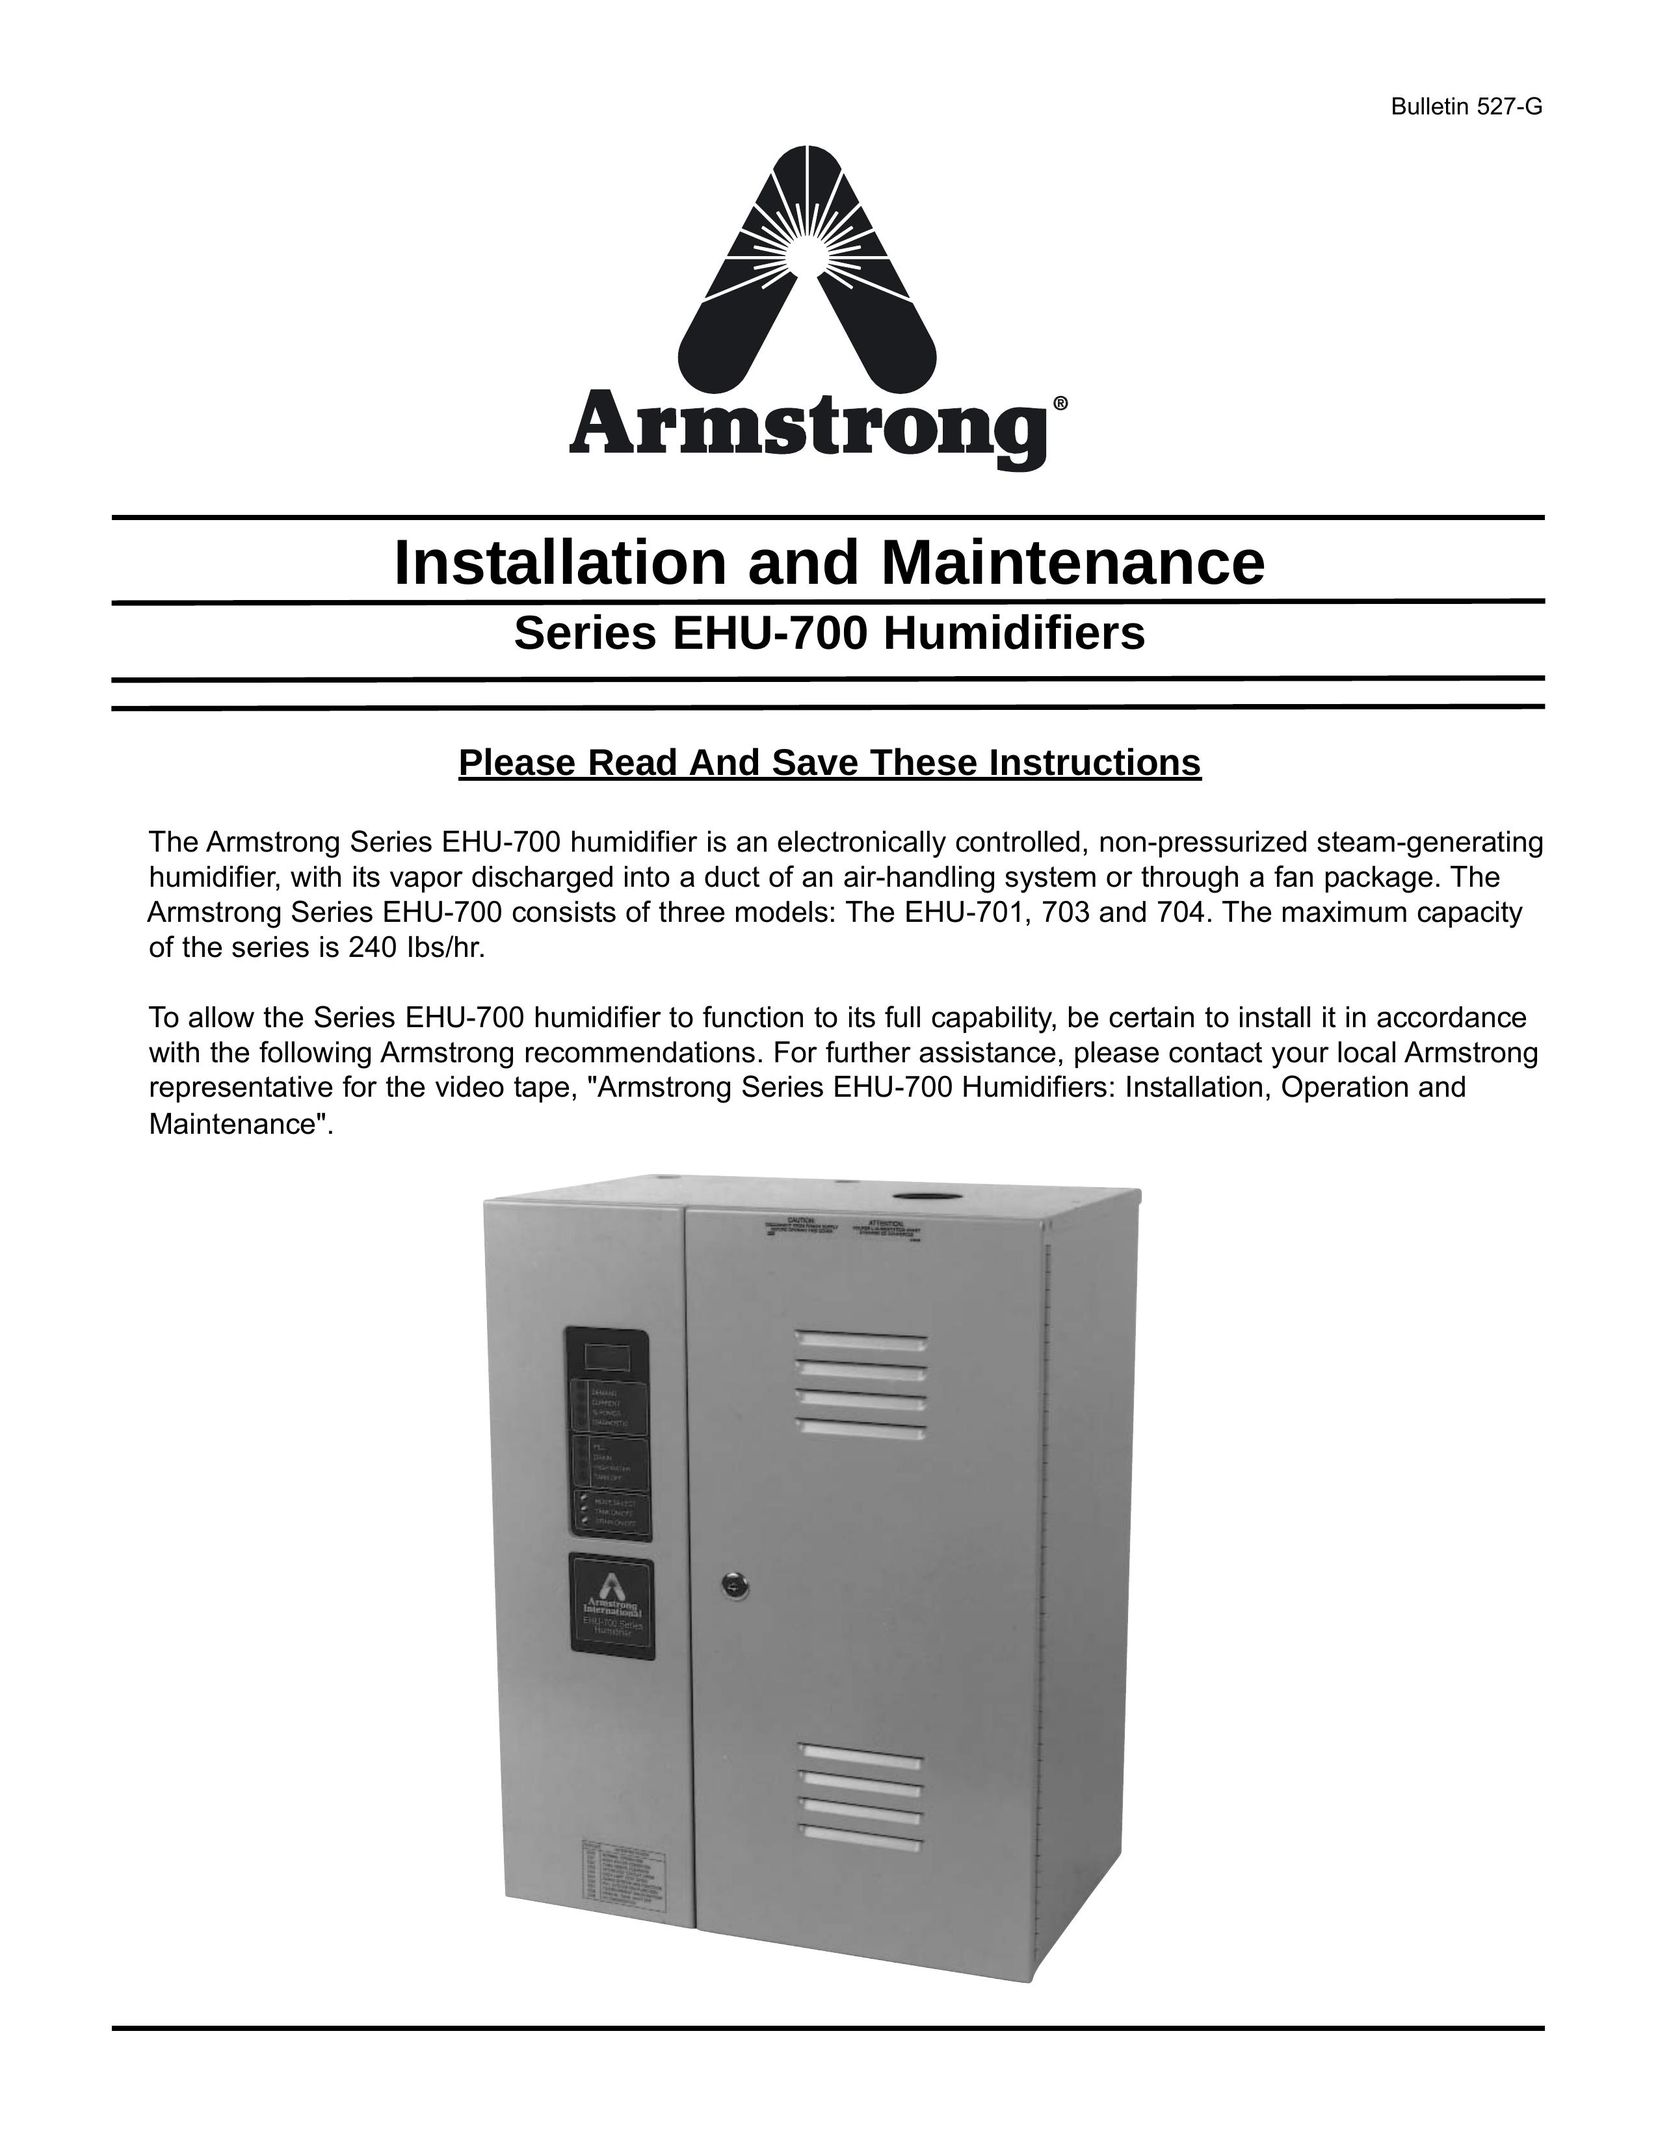 Armstrong World Industries EHU-704 Humidifier User Manual